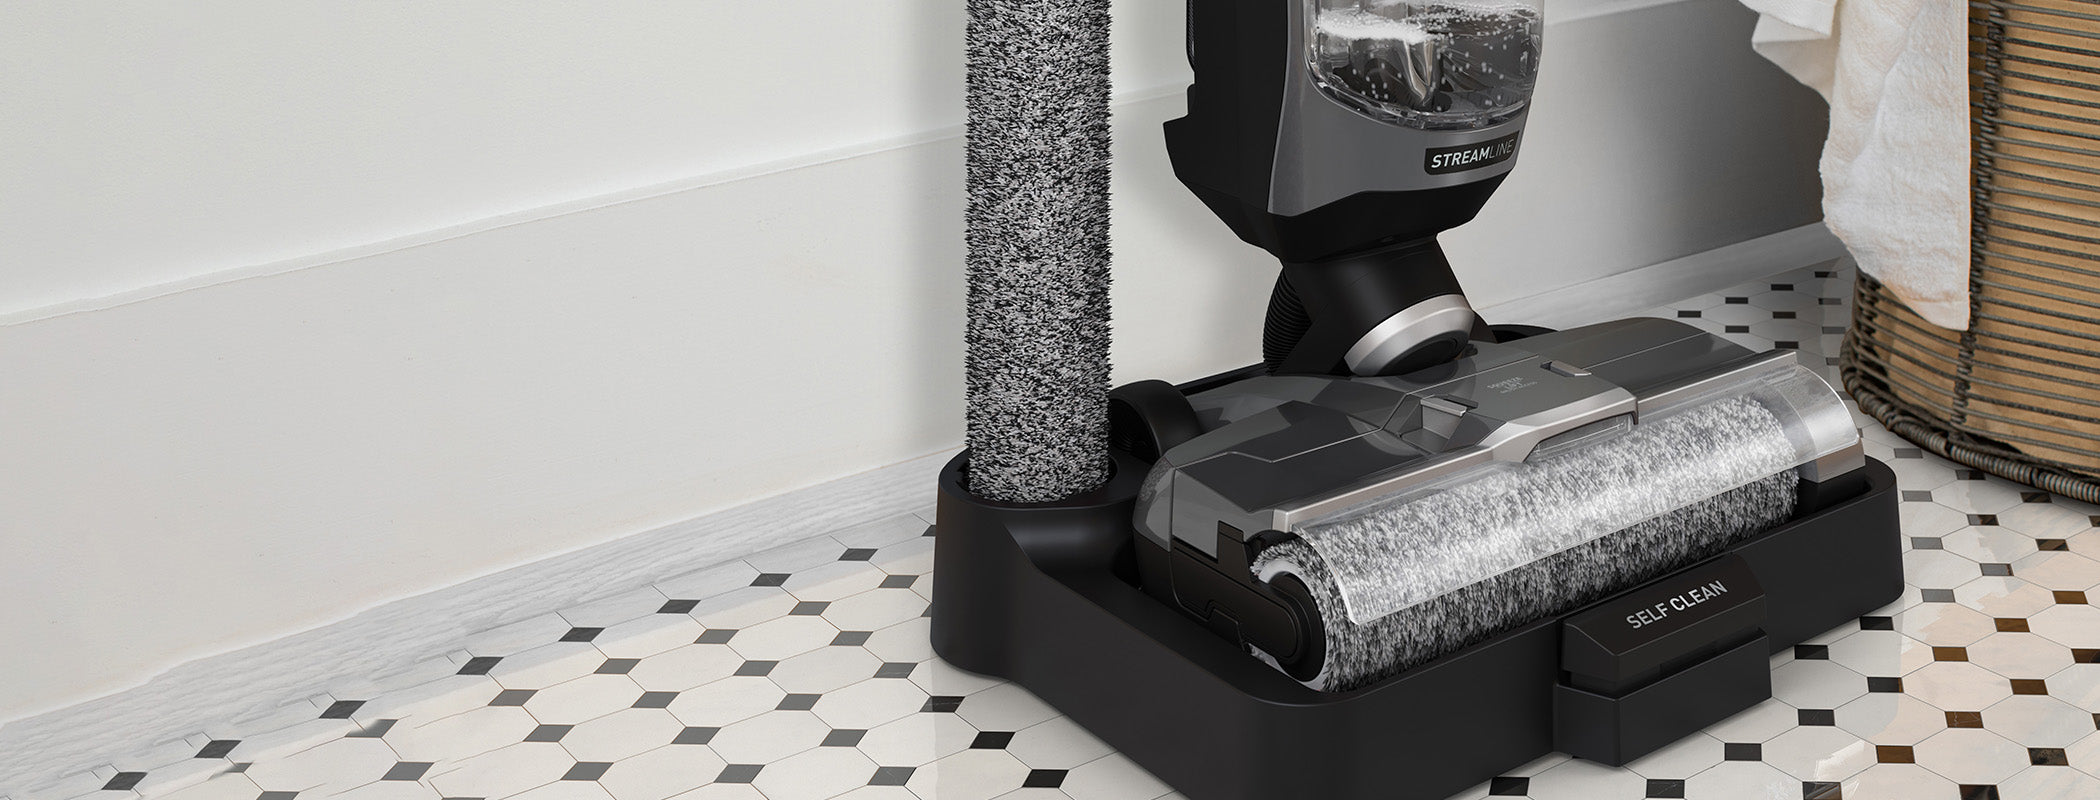 Hoover Residential Vacuum Onepwr Streamline Cordless Hard Floor Wet/Dry Vacuum BH55400V